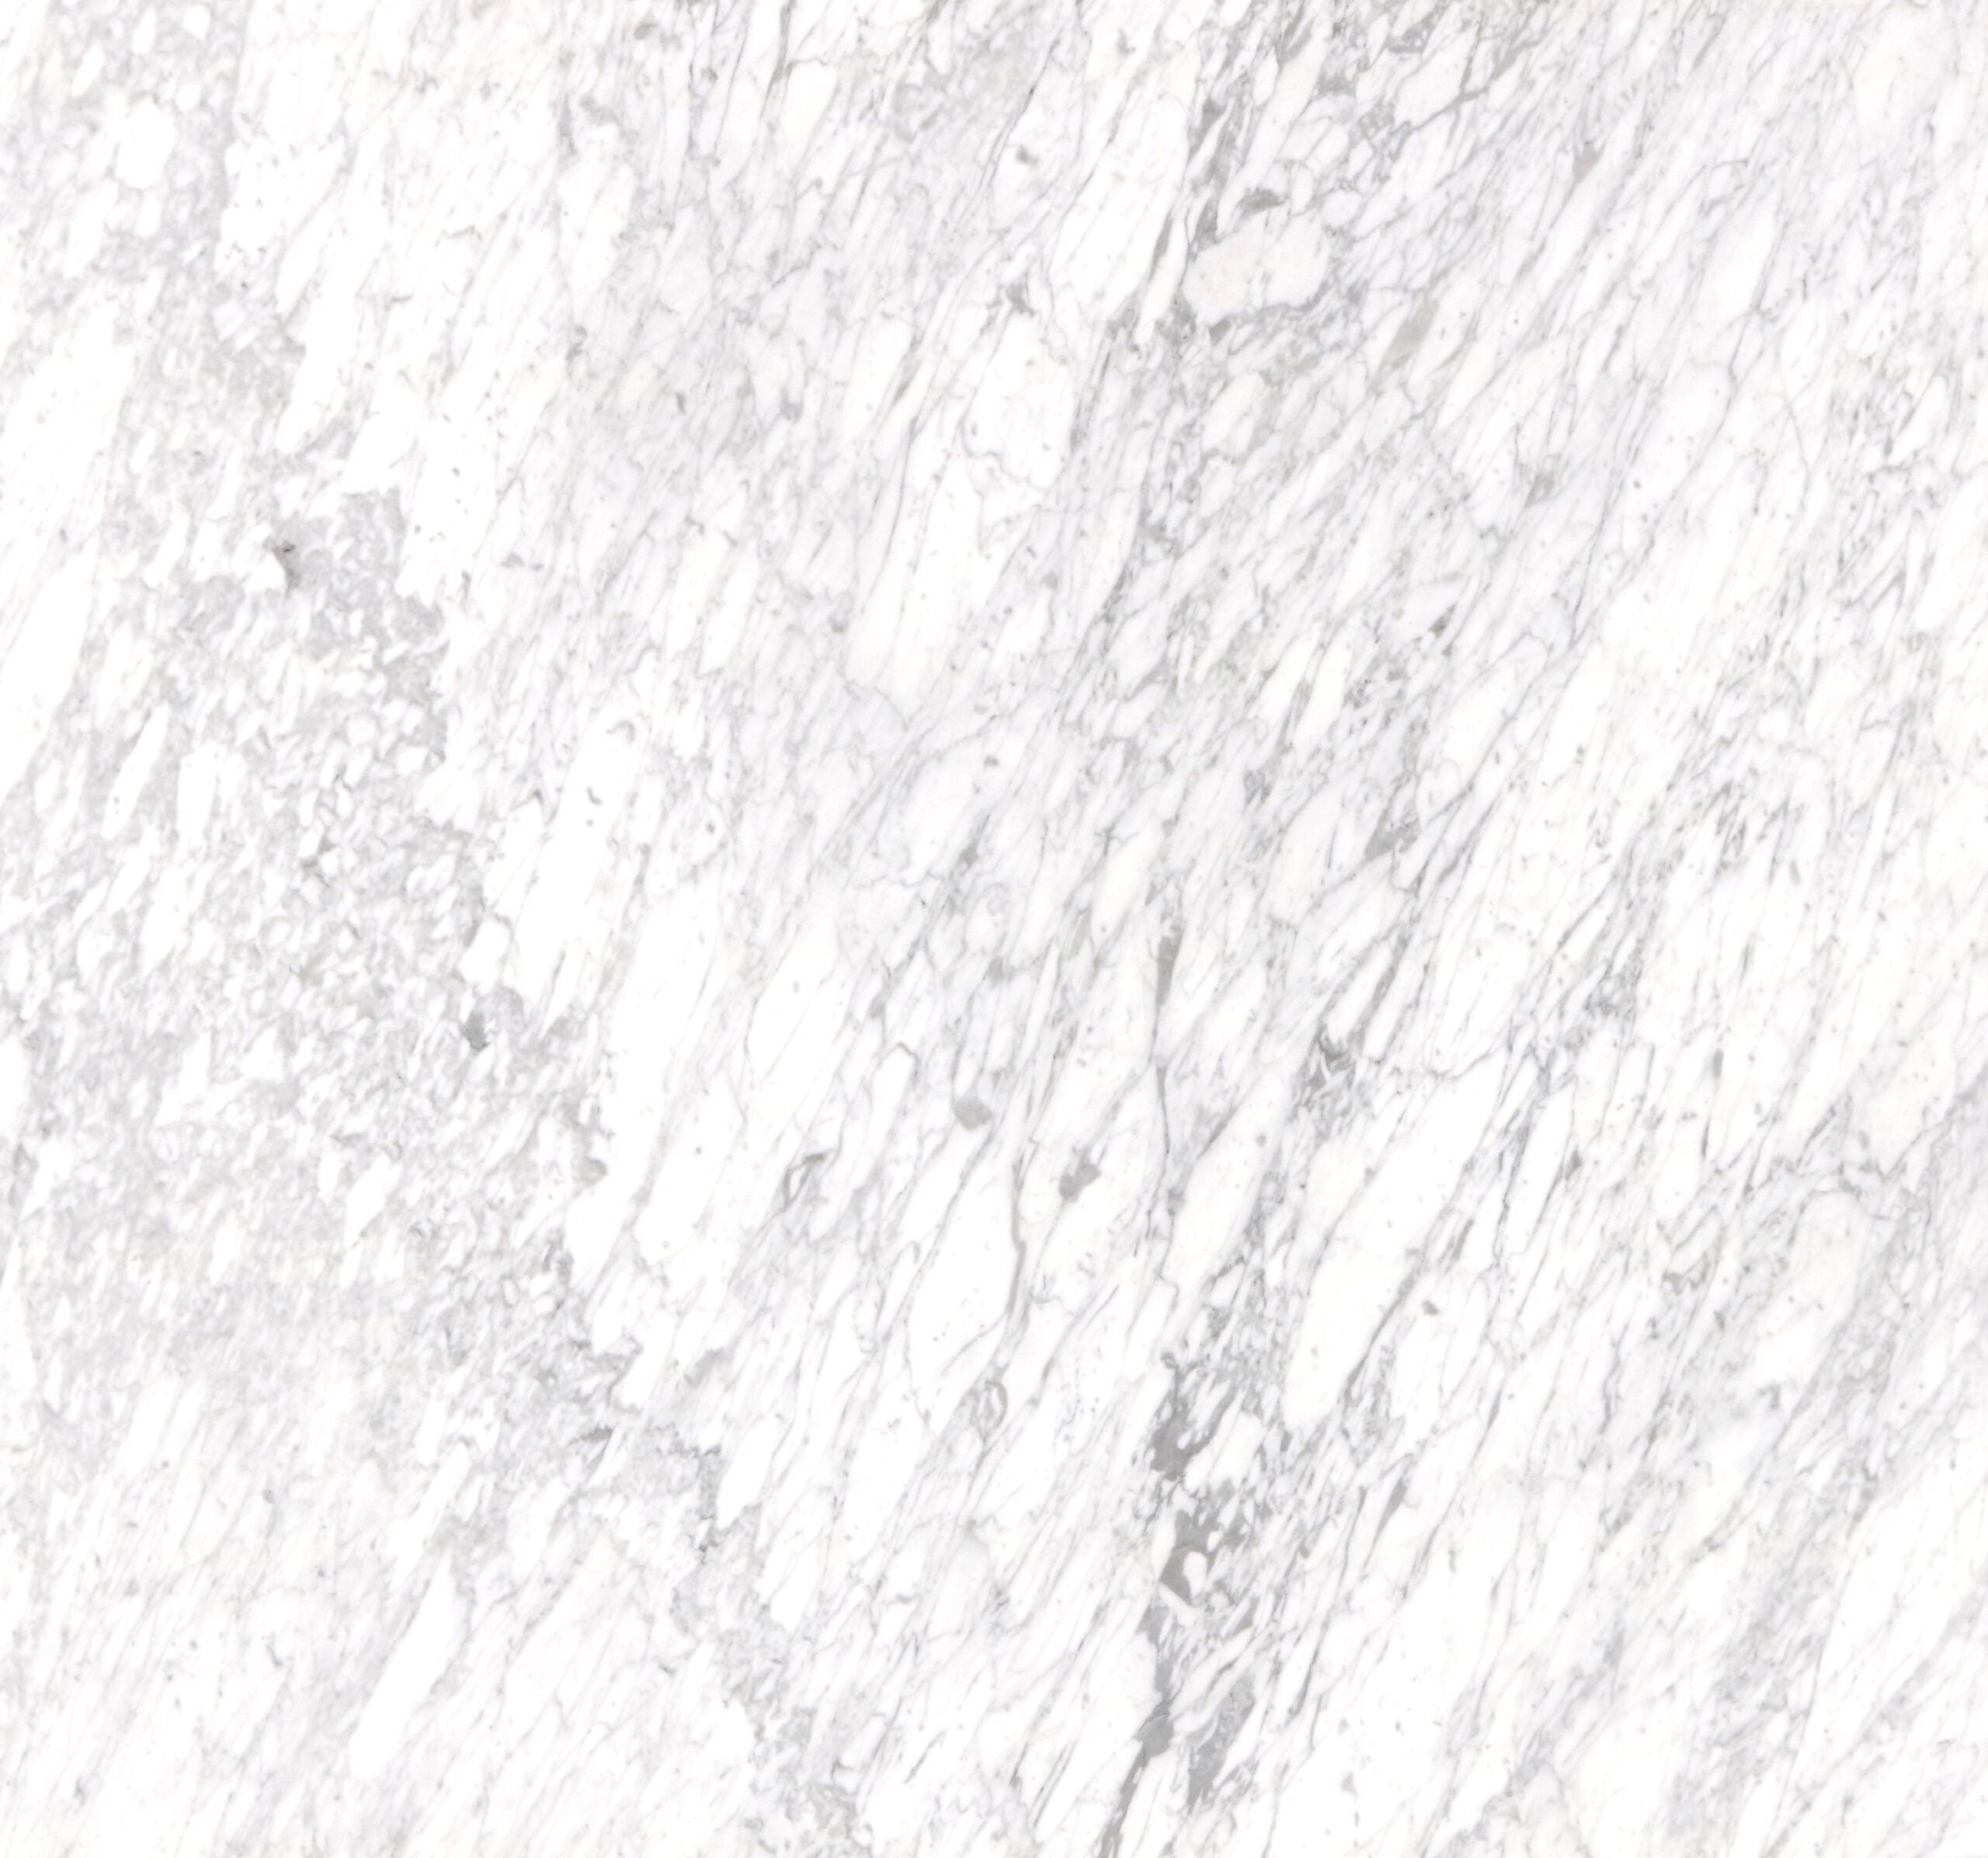 Stonemark Carrara White marble swatch